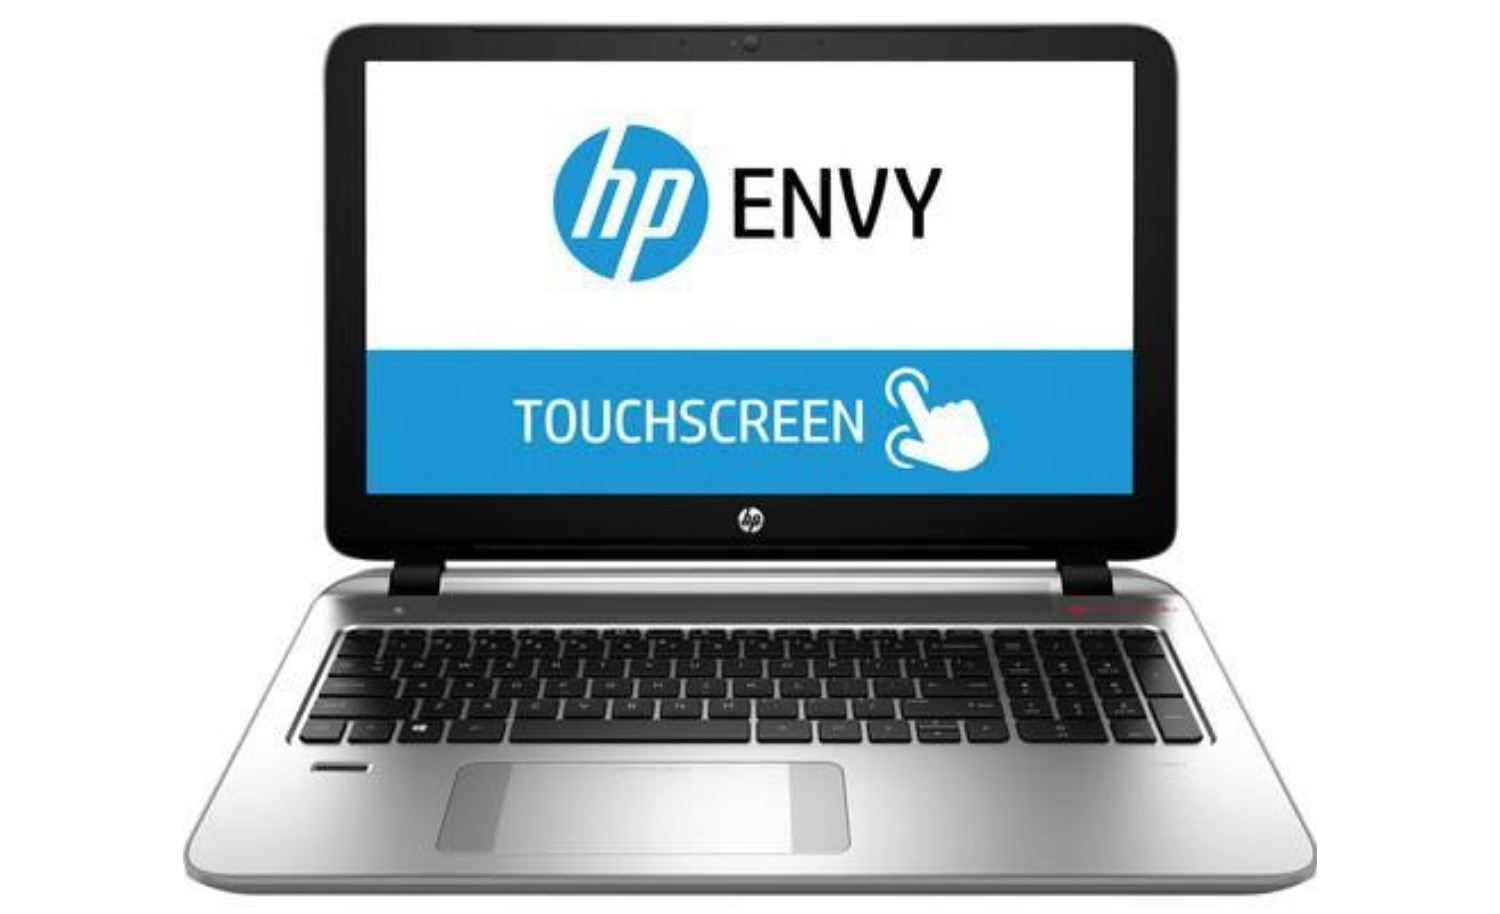 HP ENVY 15 Notebook Intel Core i7 4th Gen 8GB RAM 1000GB HDD Windows 10 Home